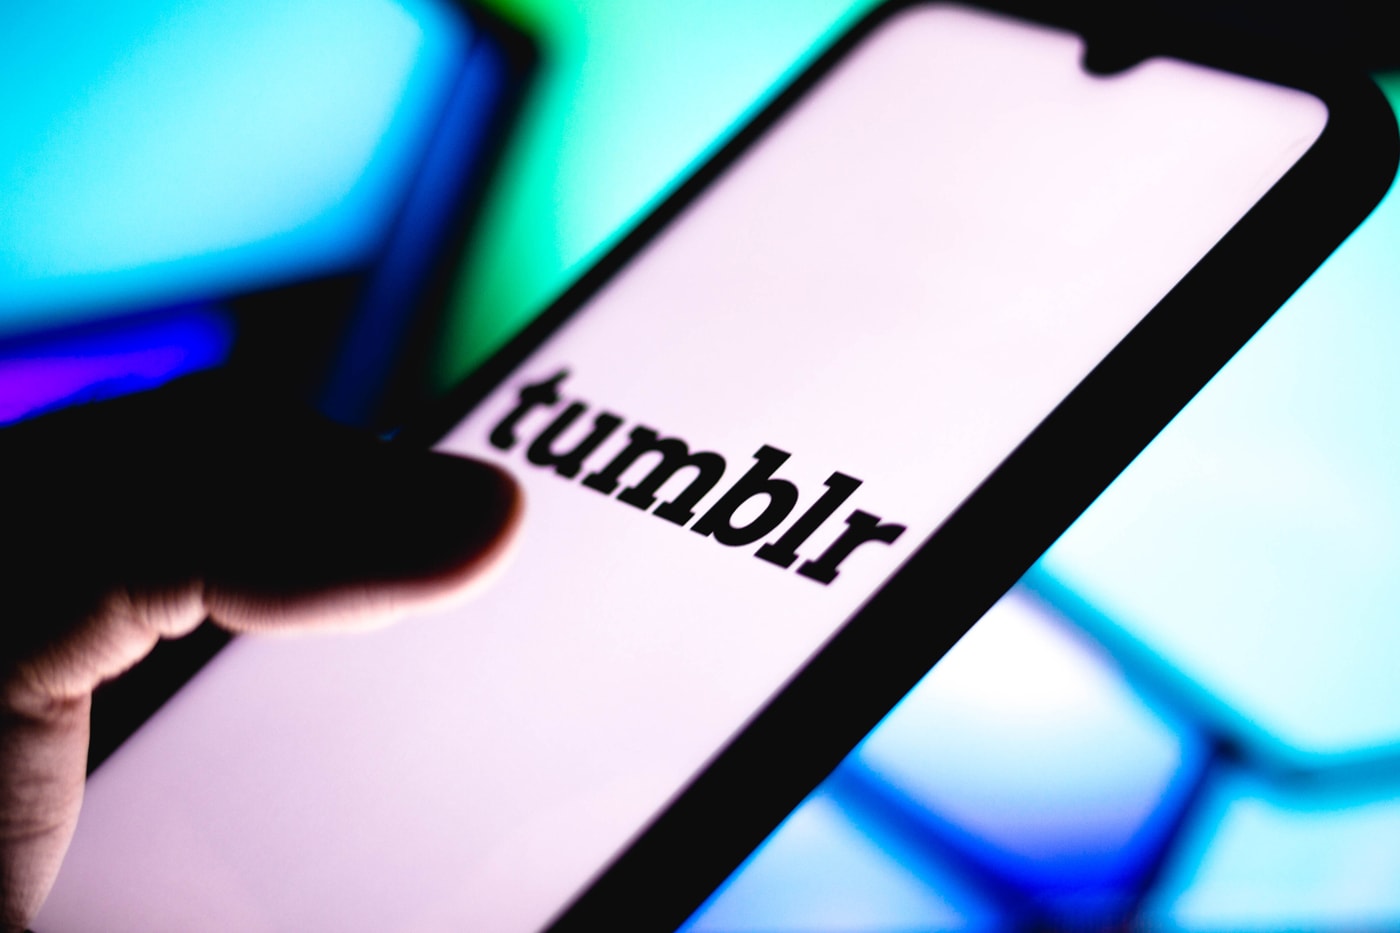 Tumblr Loses $30 Million USD Each Year ceo matt mullenweg coo zandy ring q&a plaform social media